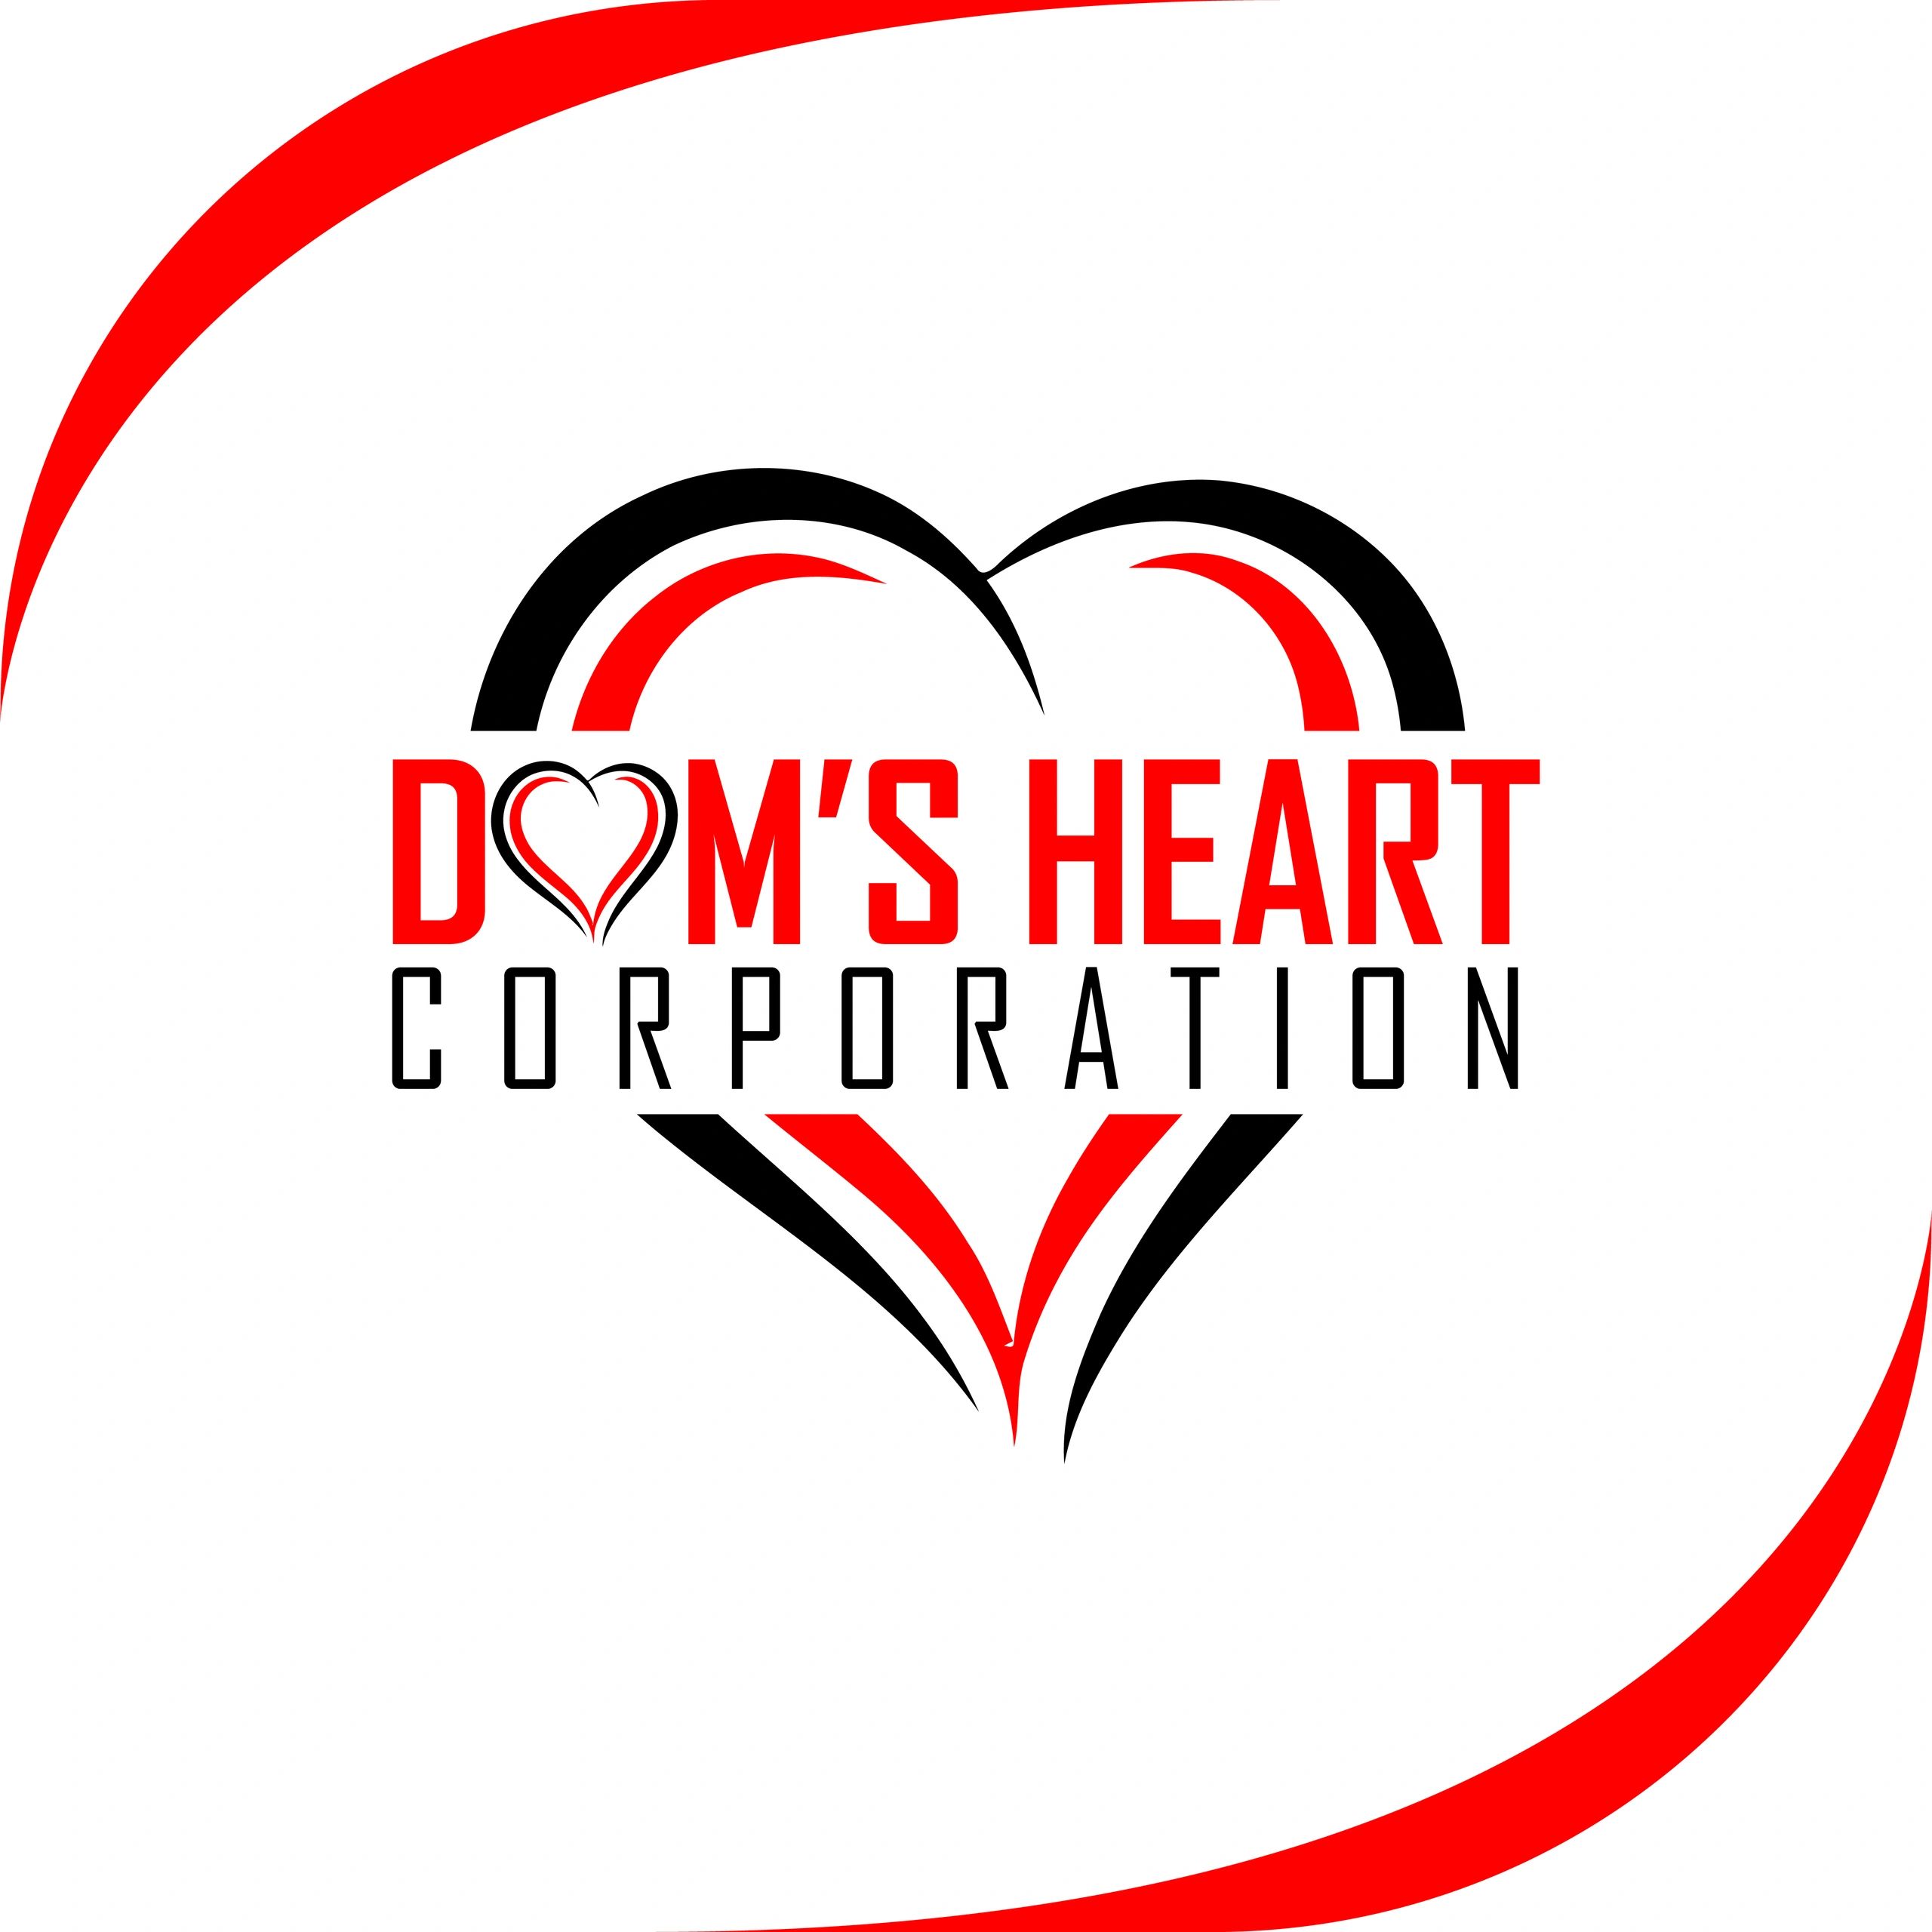 Corporation heart